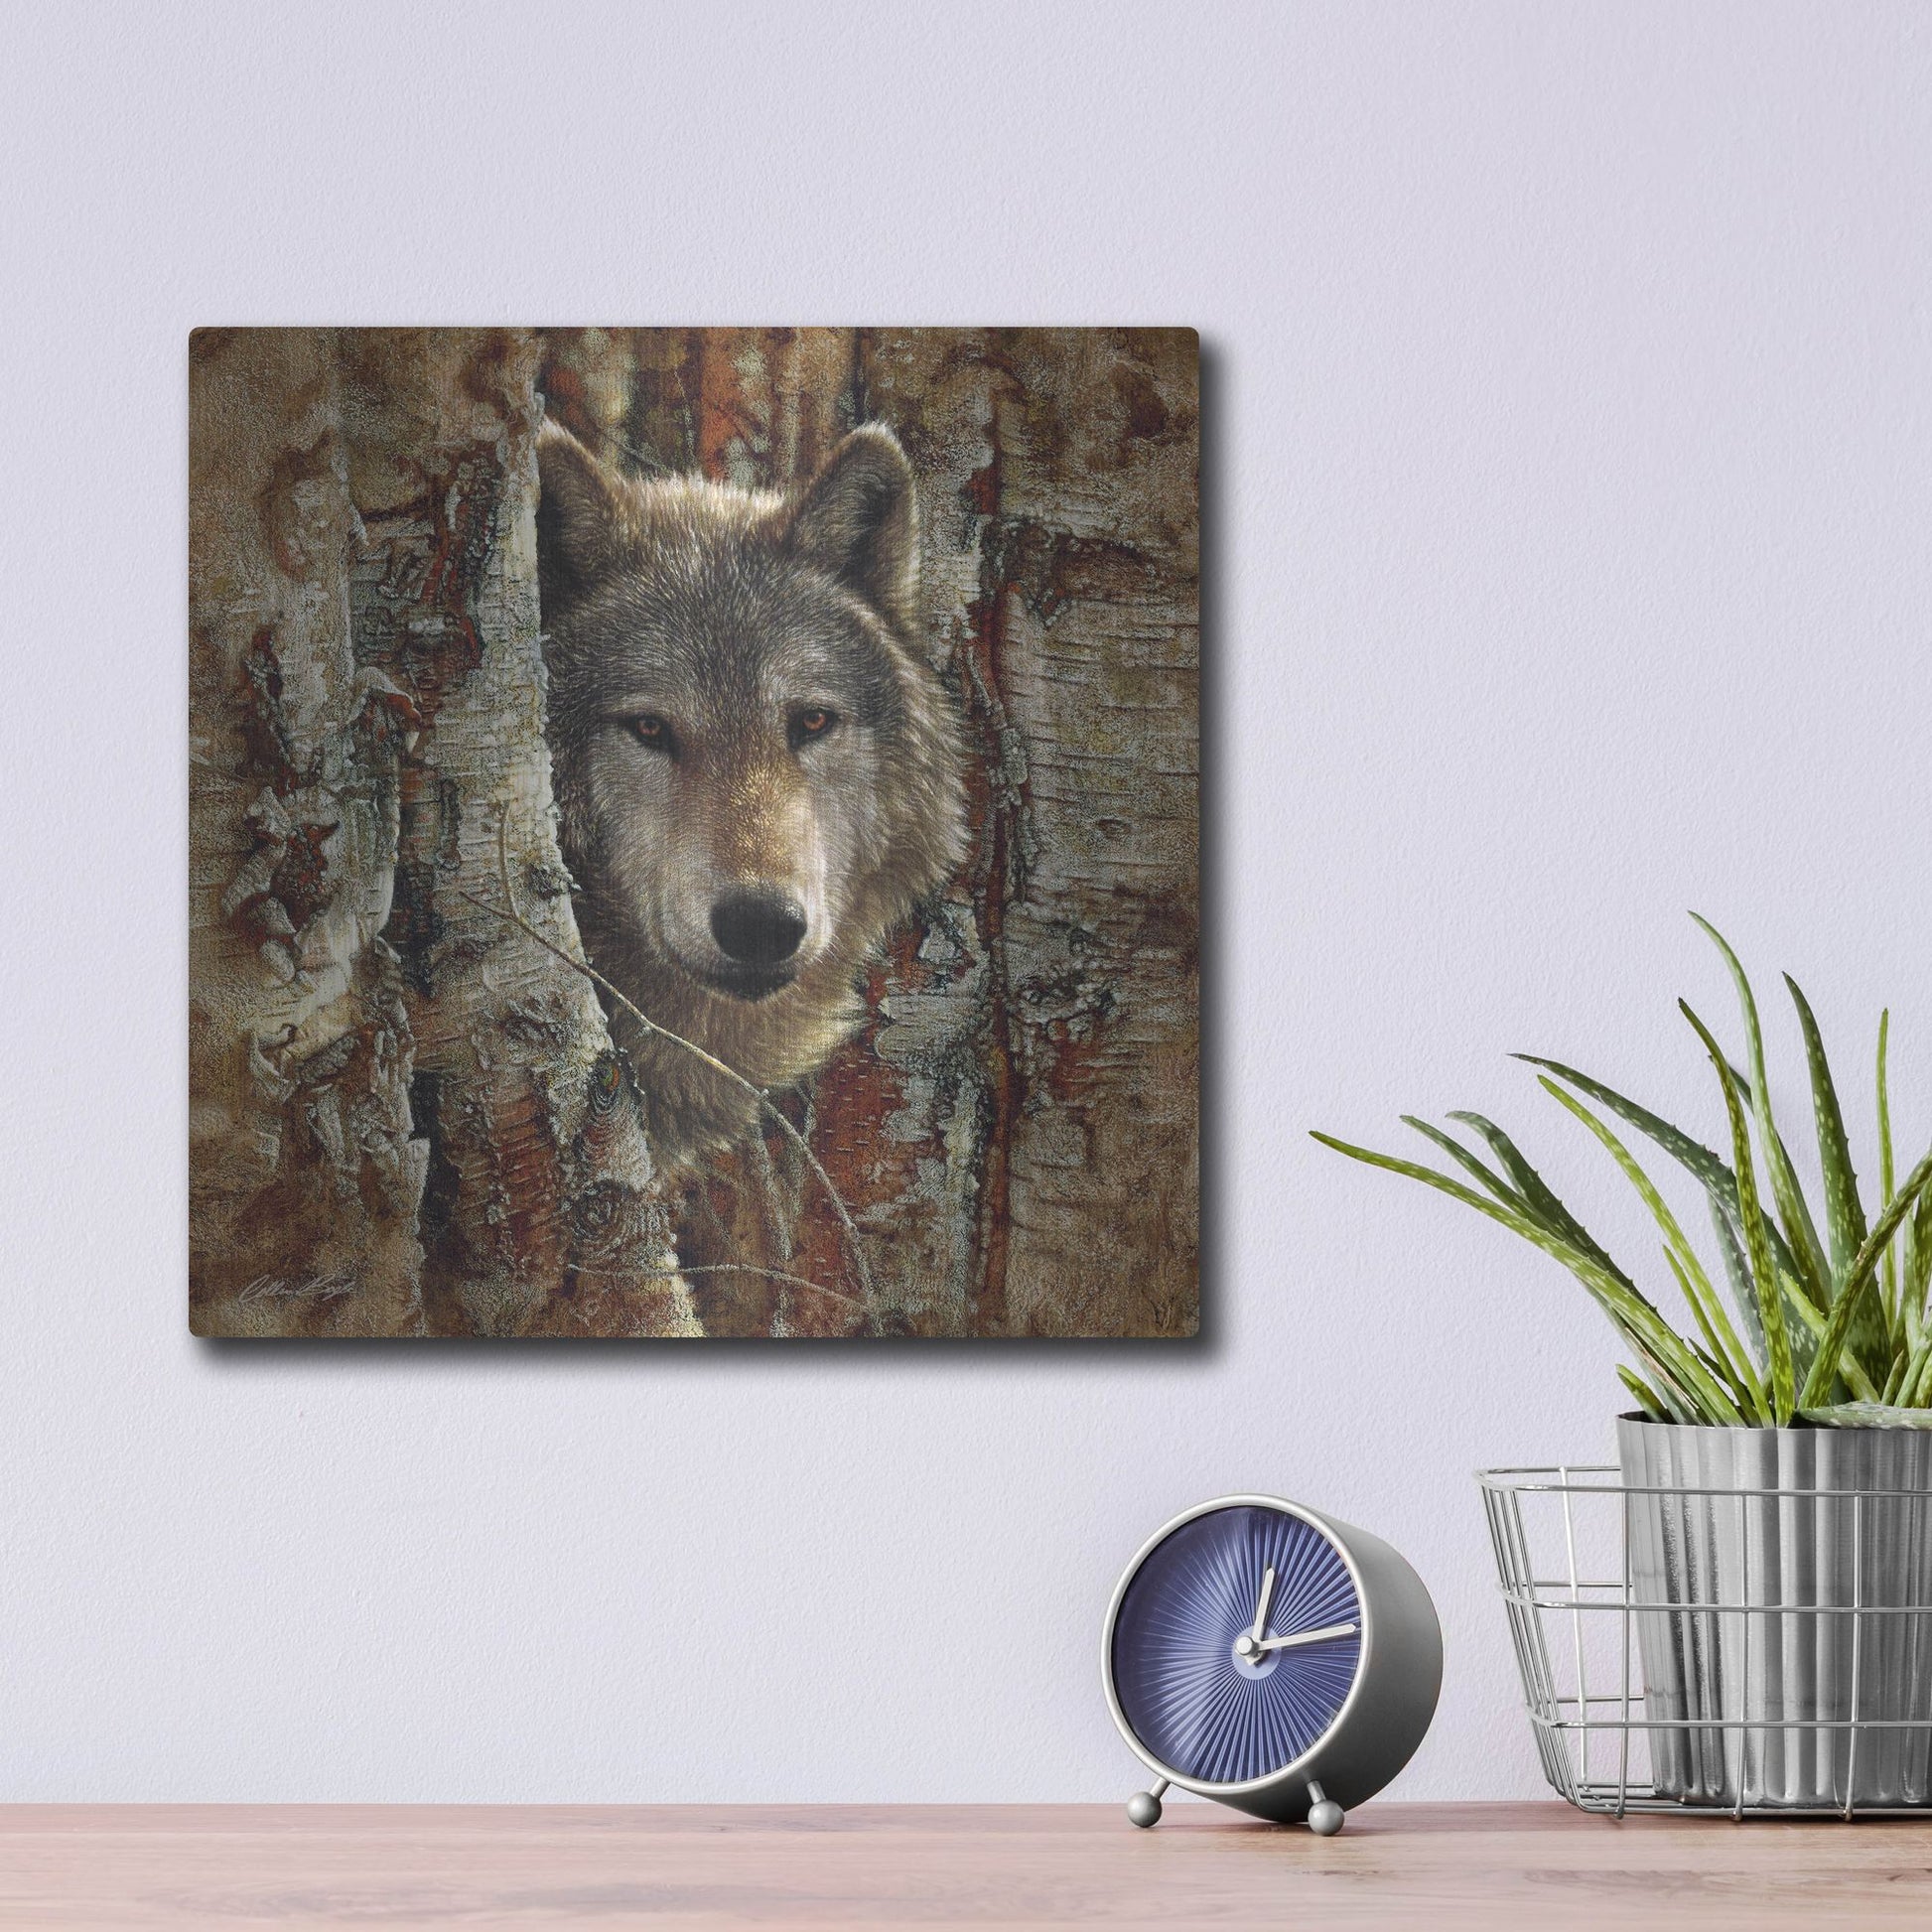 Luxe Metal Art 'Wolf Spirit' by Collin Bogle, Metal Wall Art,12x12